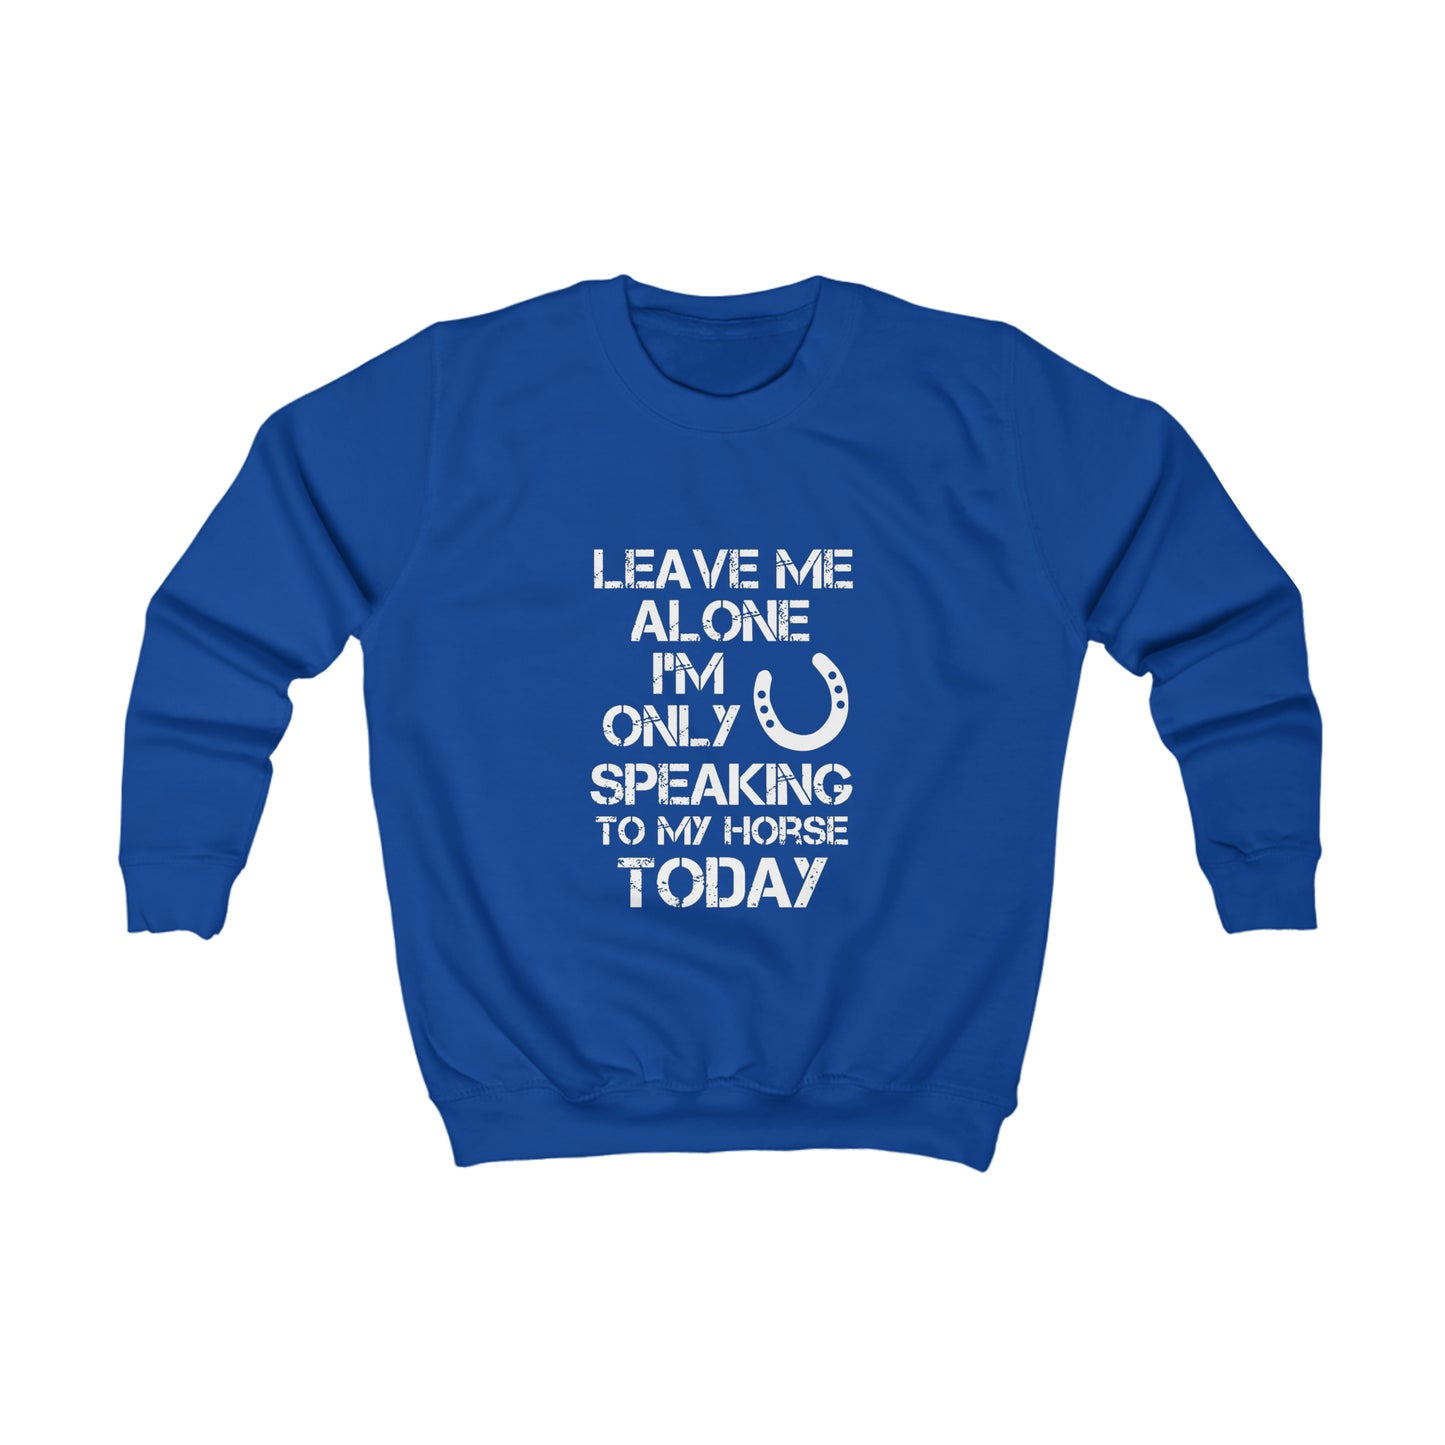 Leave Me Alone - Kids Sweatshirt